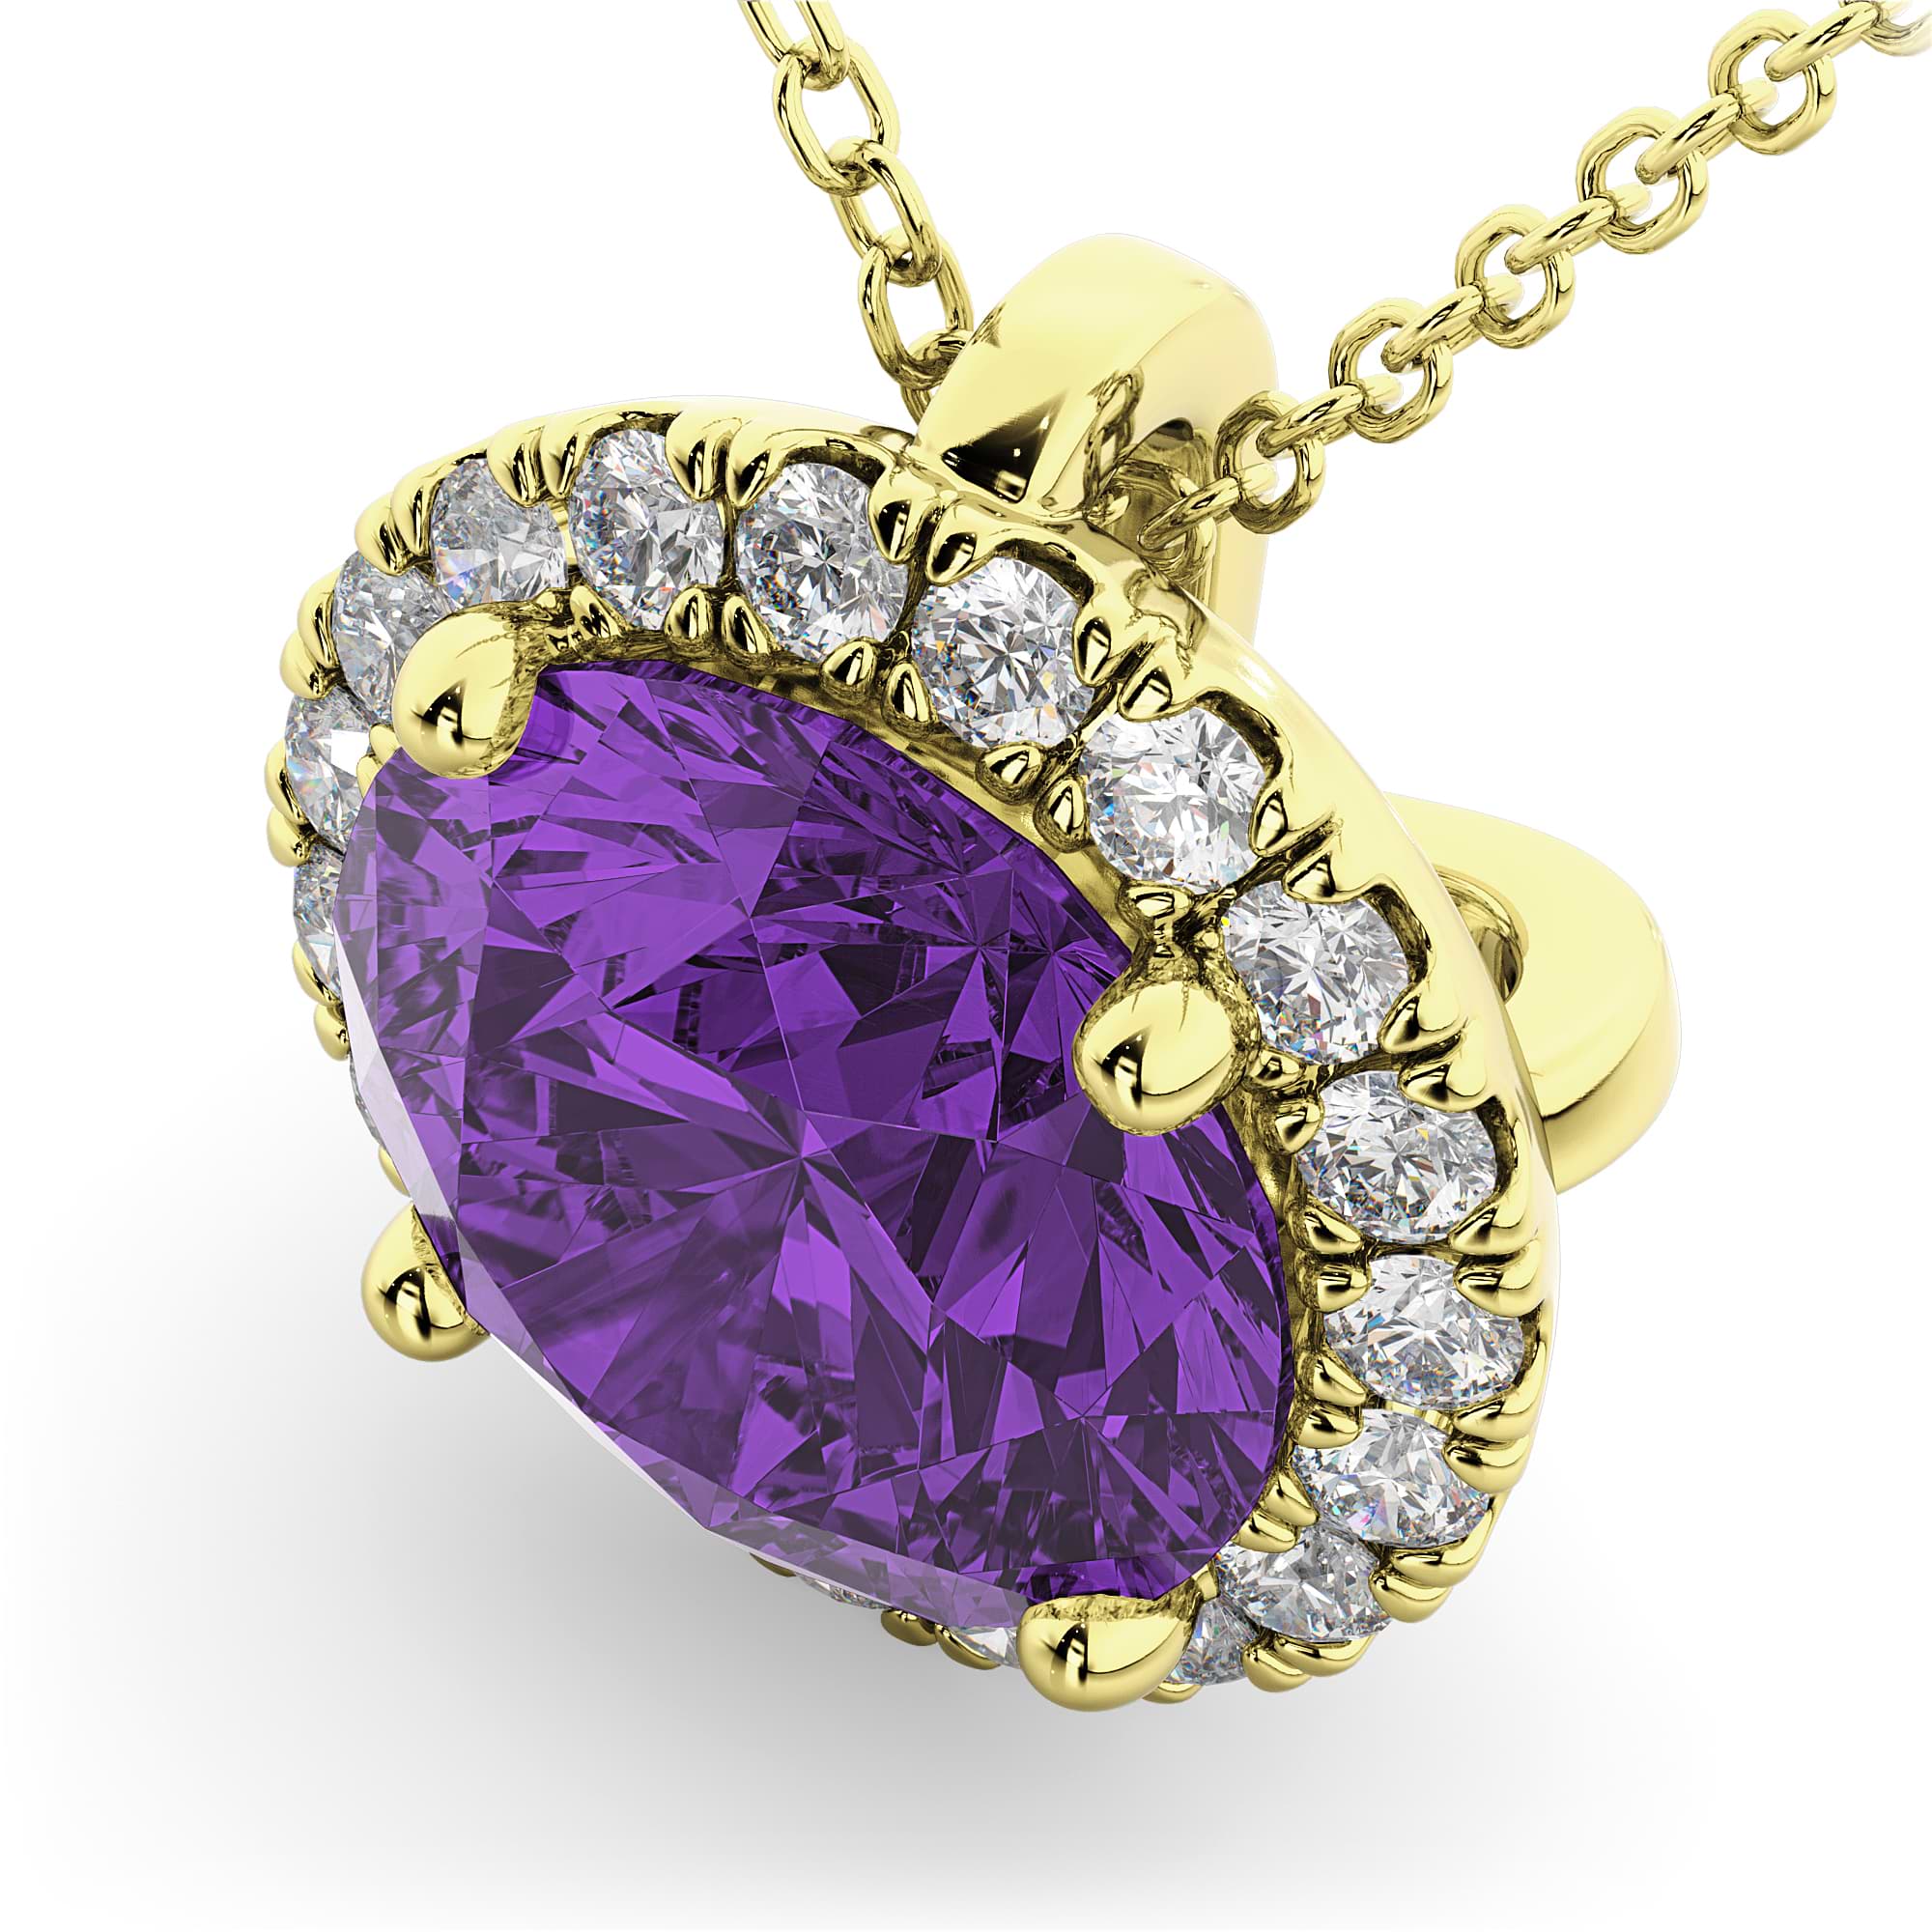 Halo Round Amethyst & Diamond Pendant Necklace 14k Yellow Gold (2.09ct)